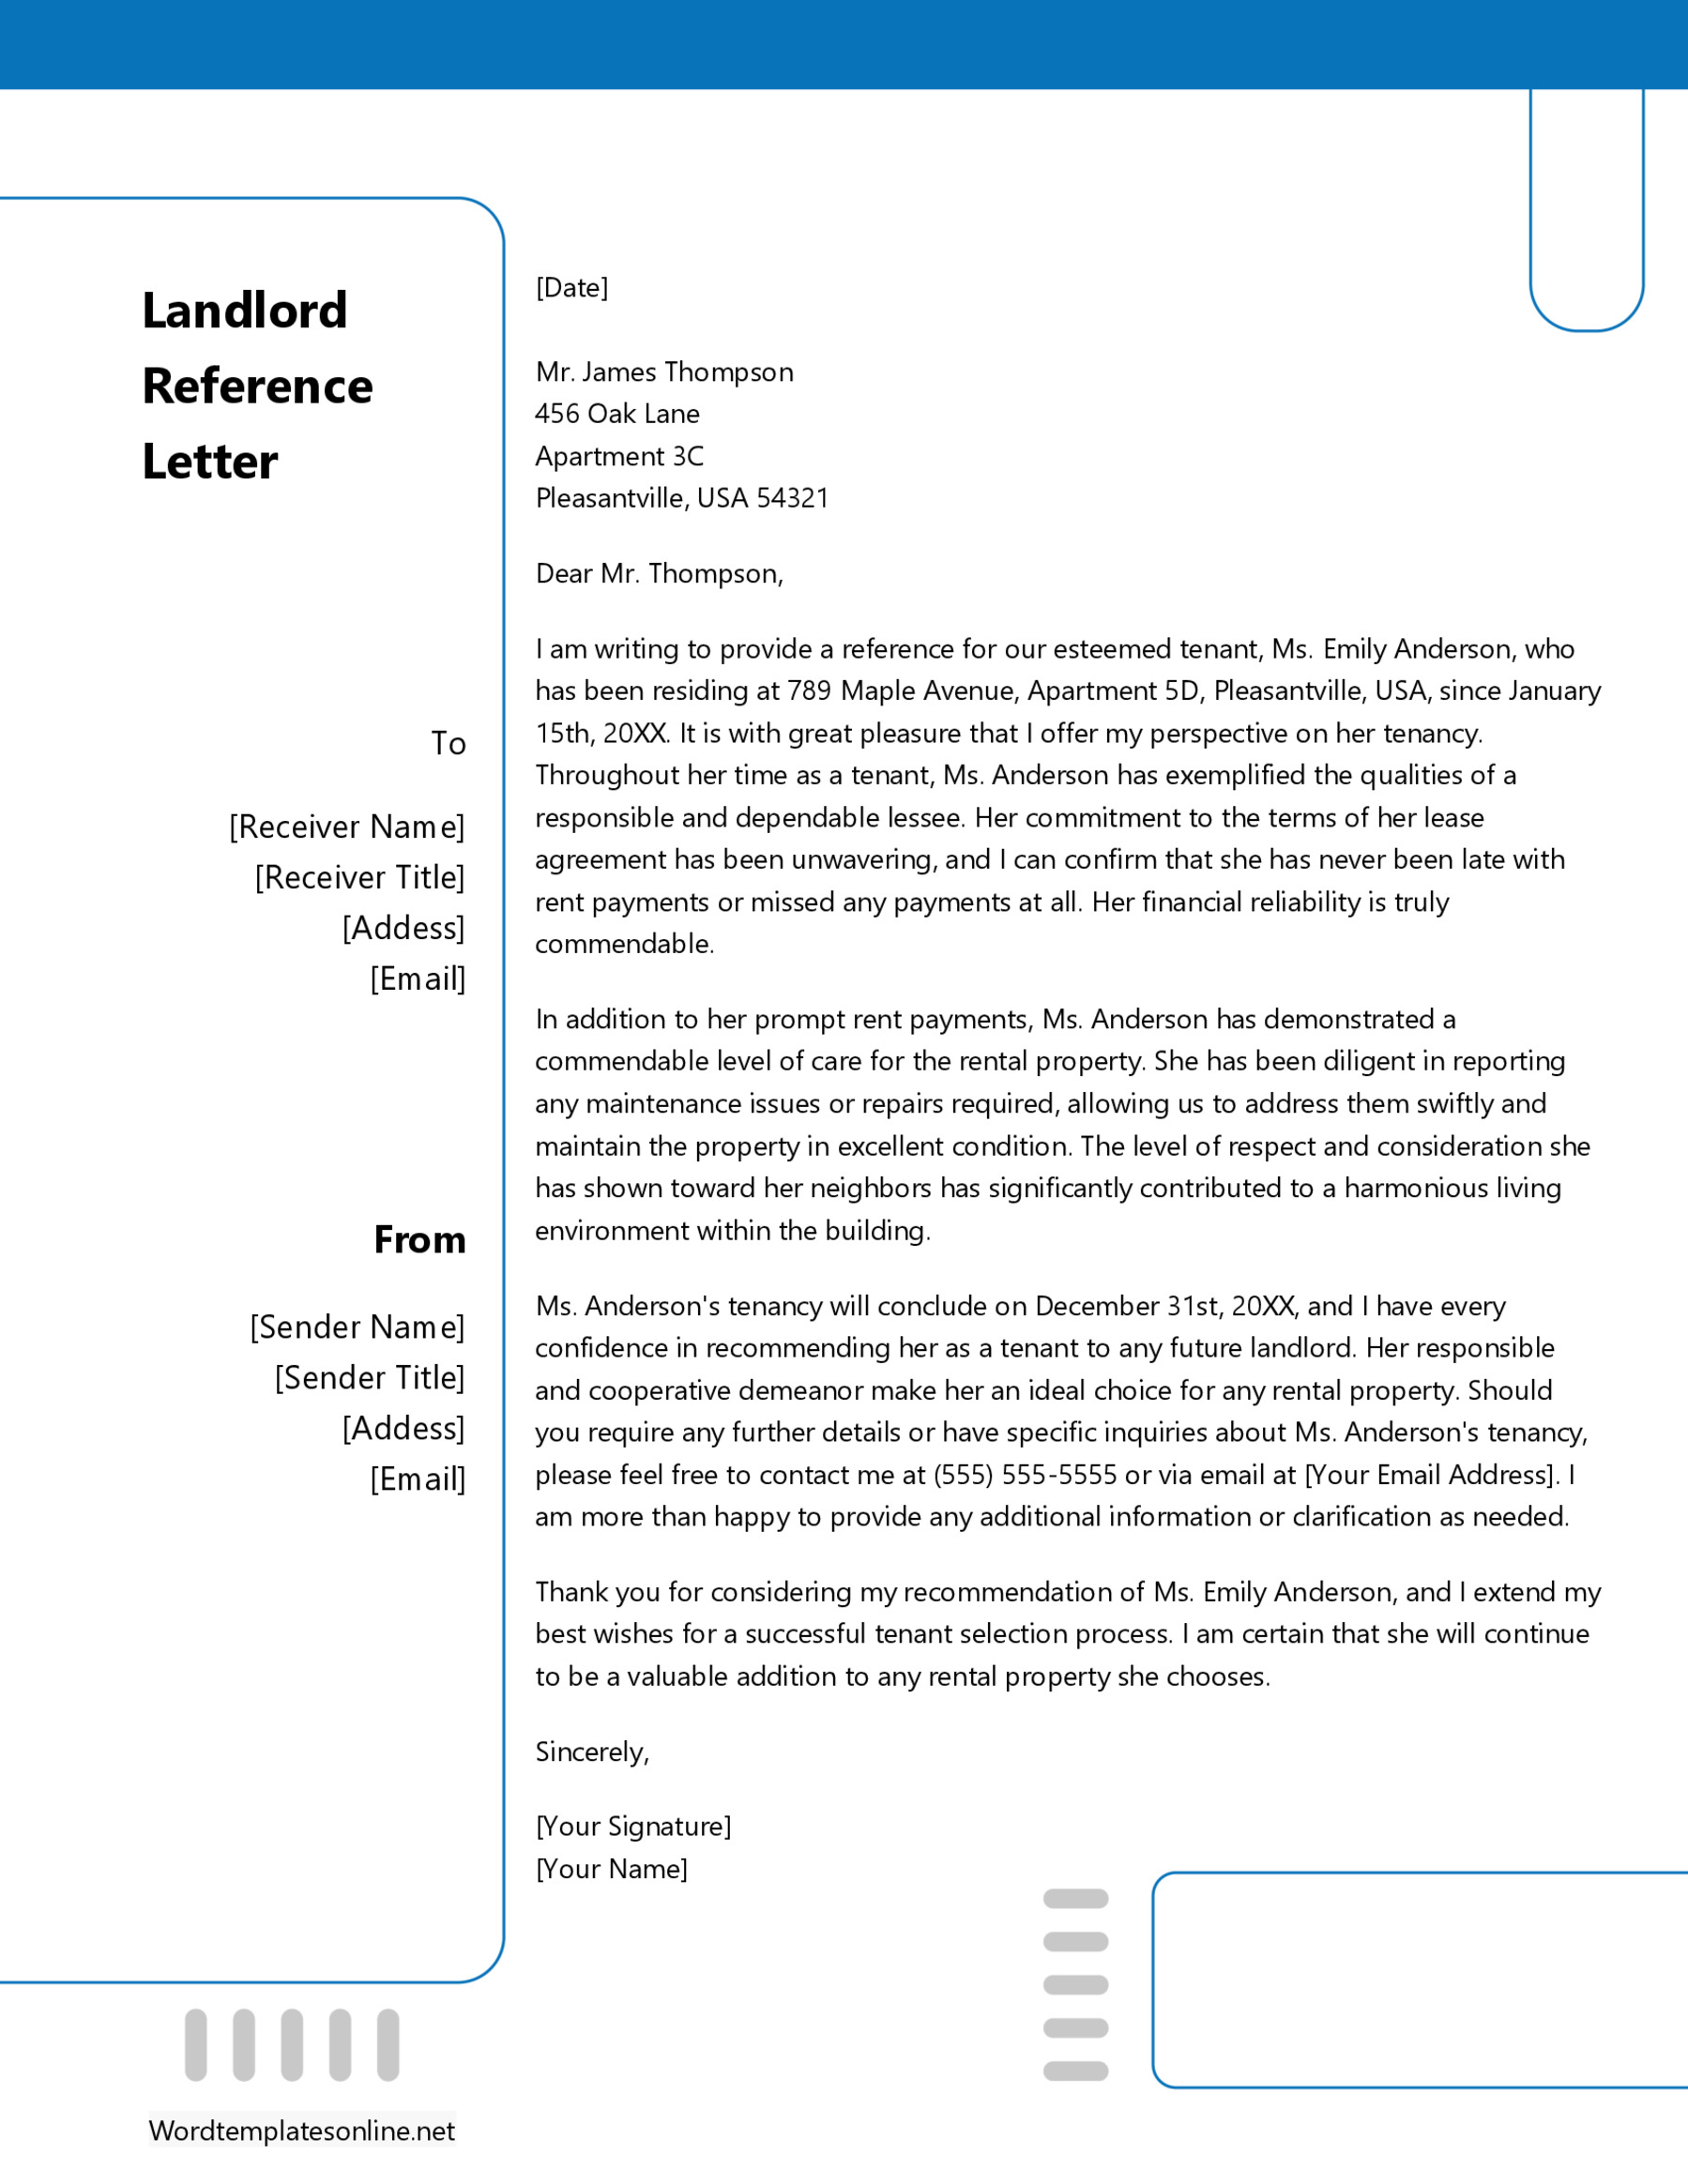 Sample Landlord Reference Letter Format